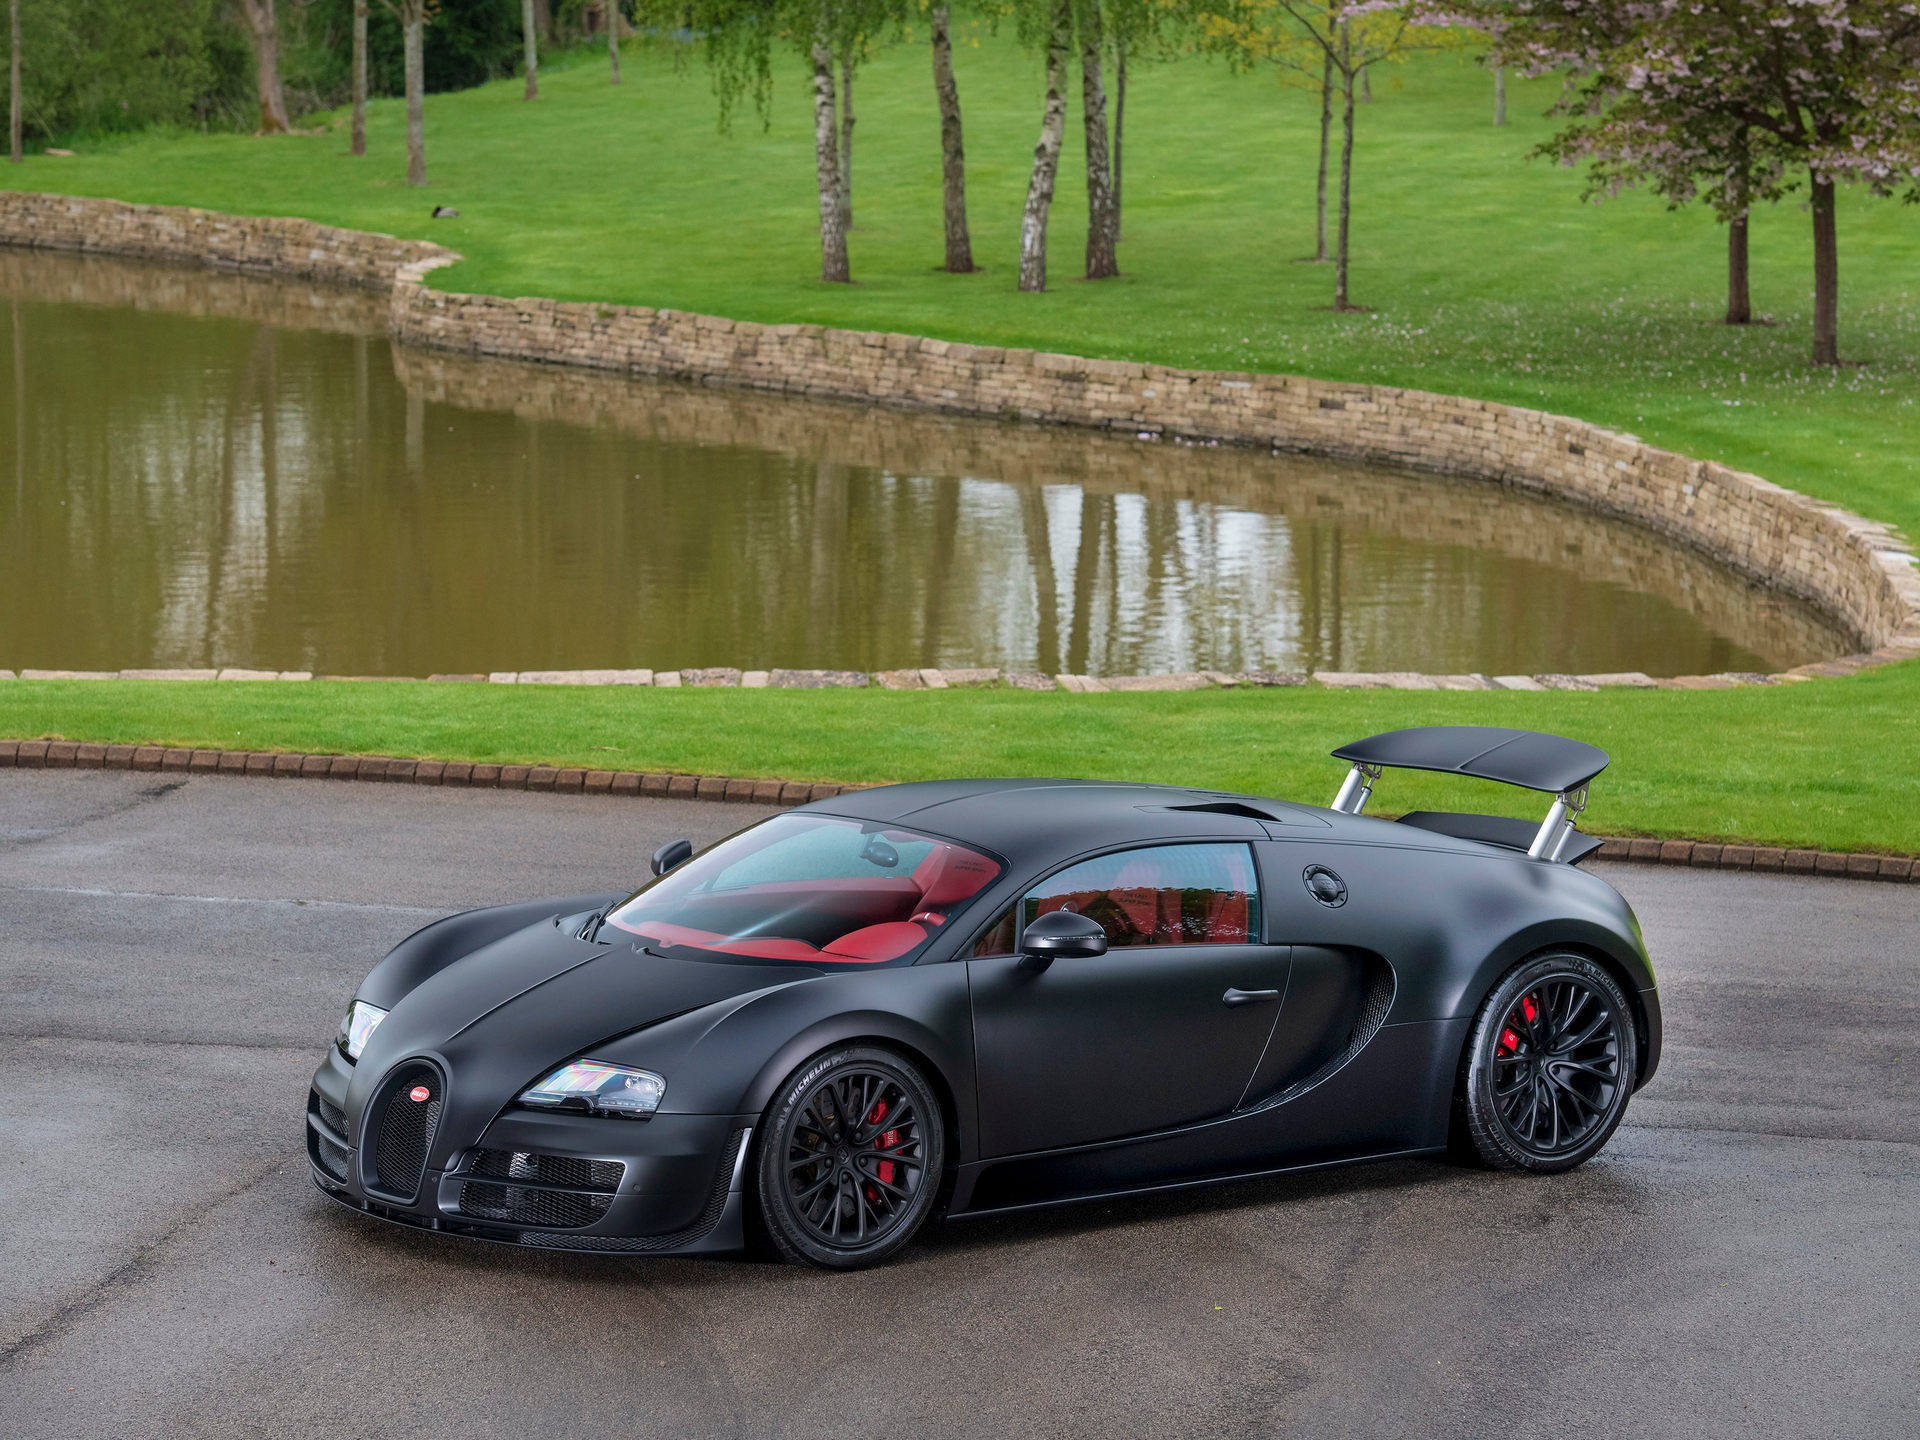 Bugatti Veyron Super Sport cuoi cung duoc rao ban anh 10